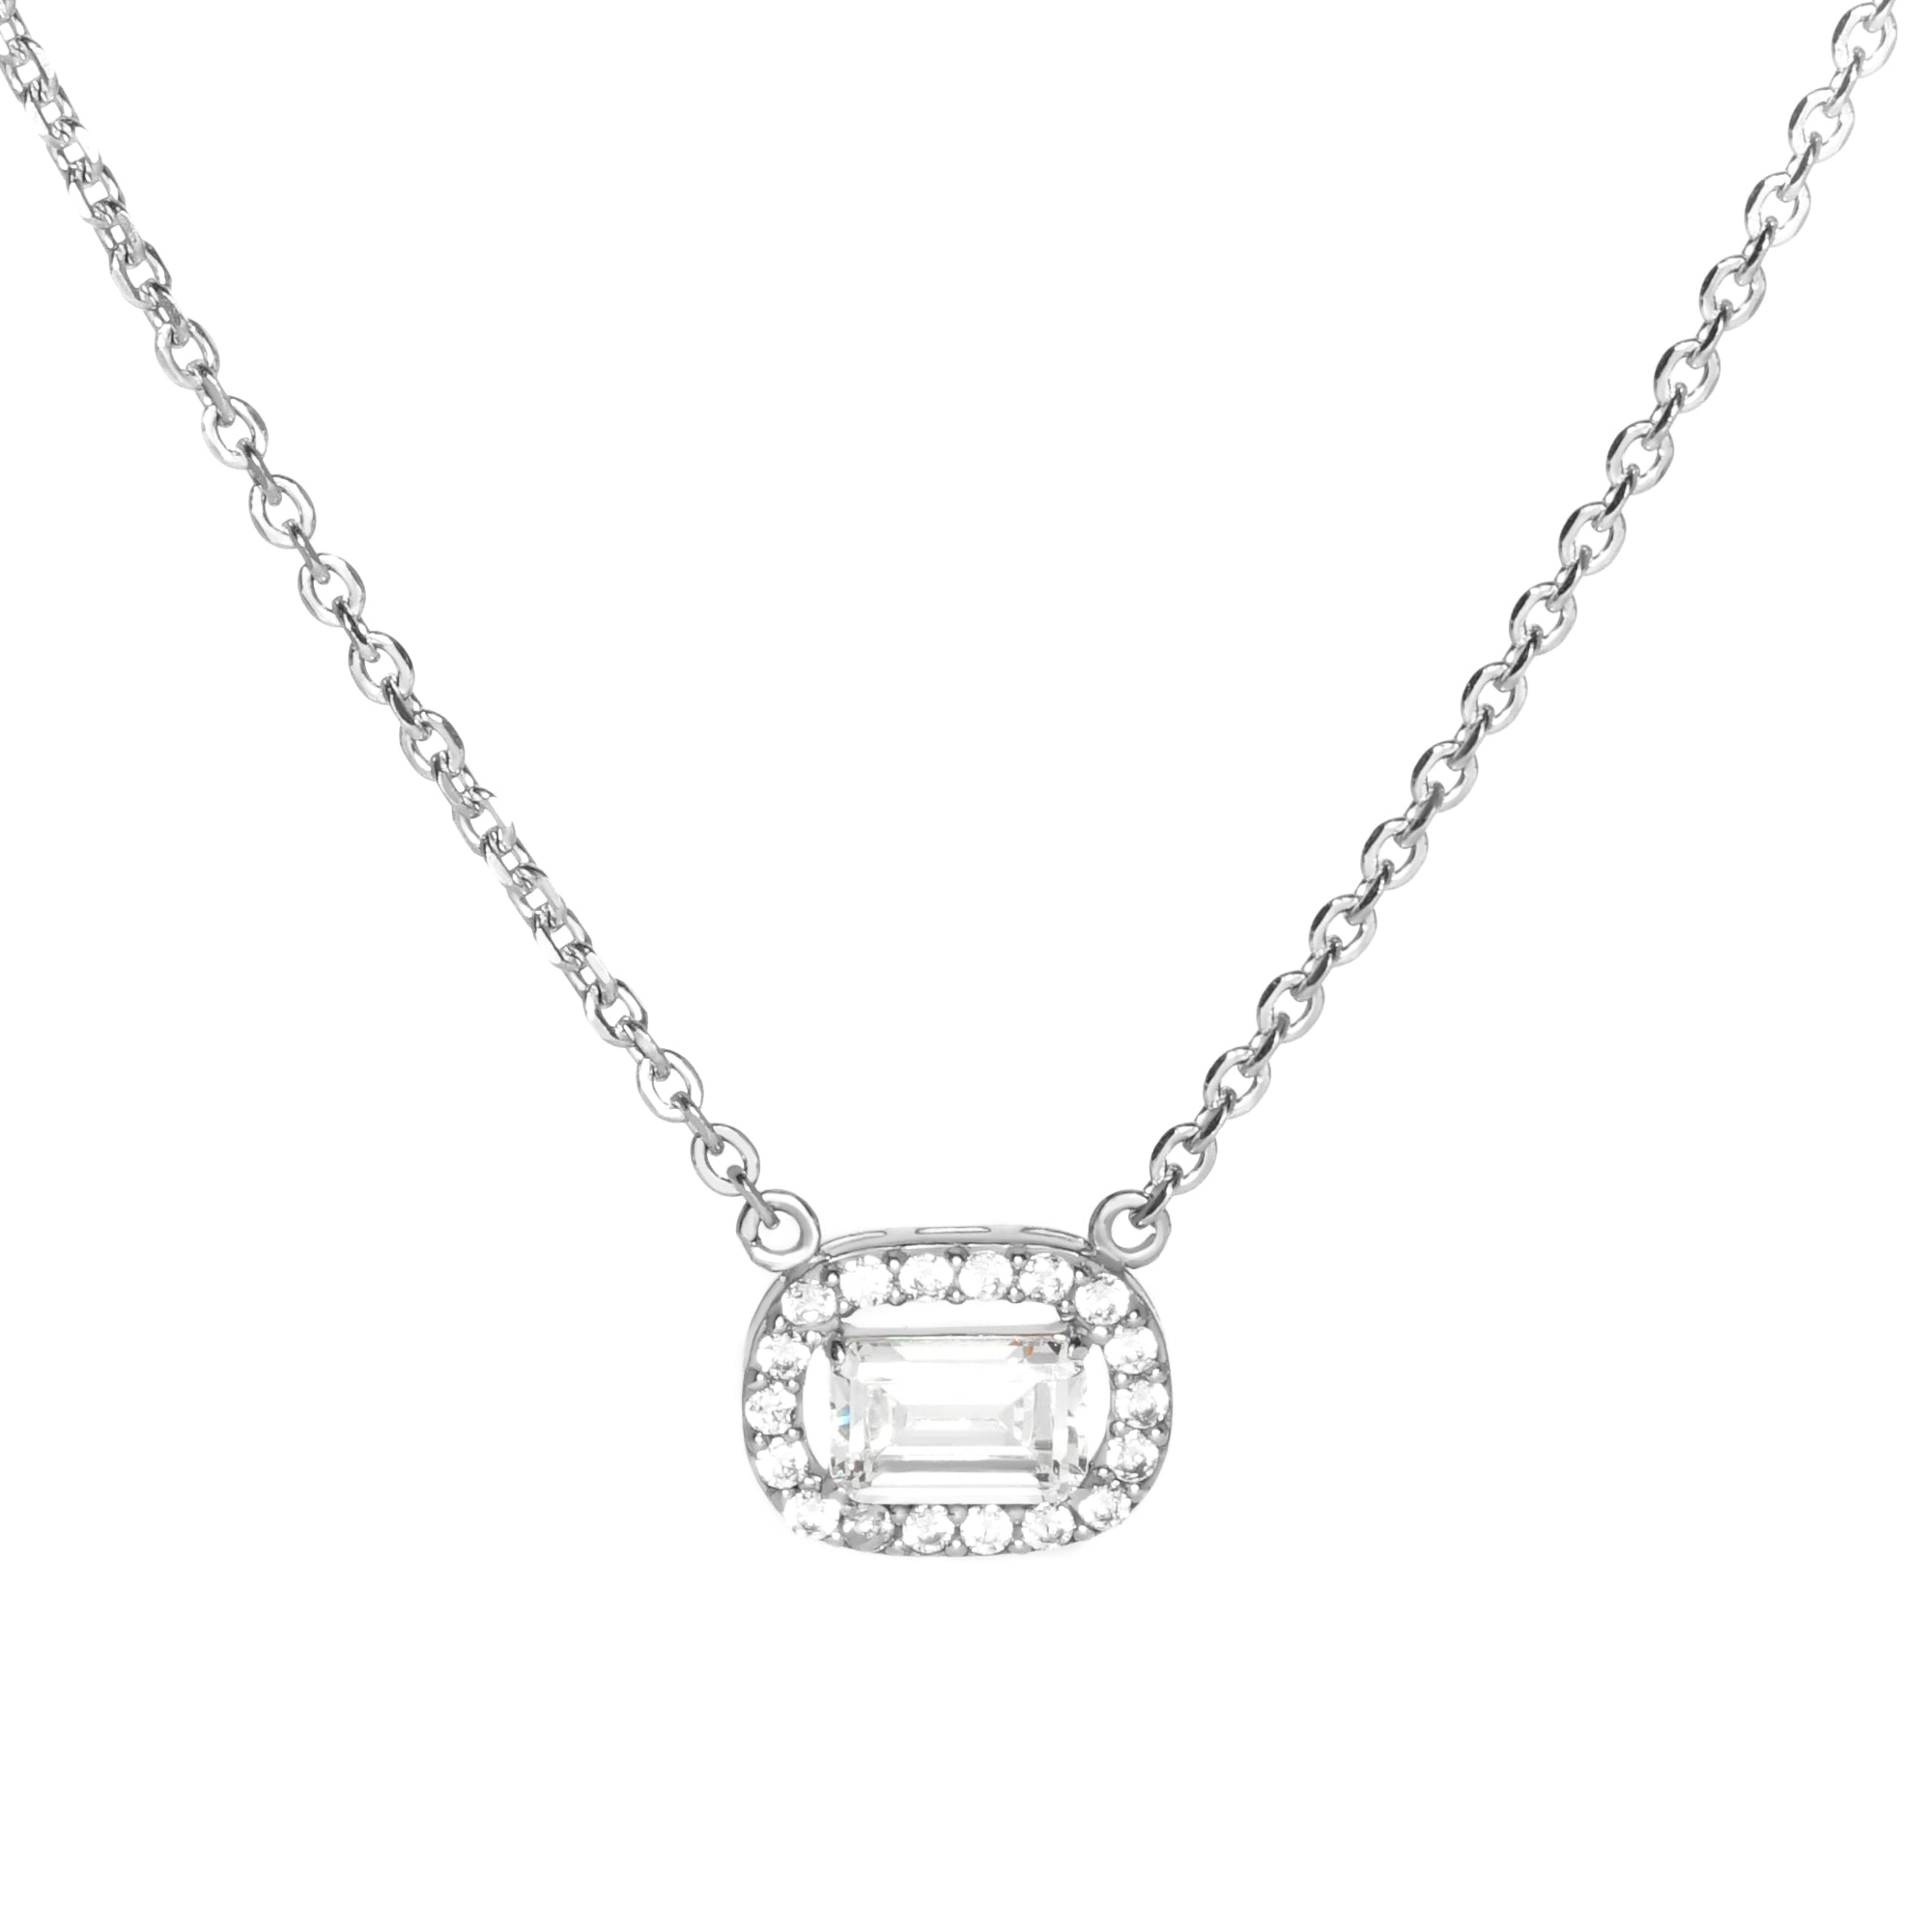 Agatha Gold Necklace - WS 01 Seasons - Juene Jewelry